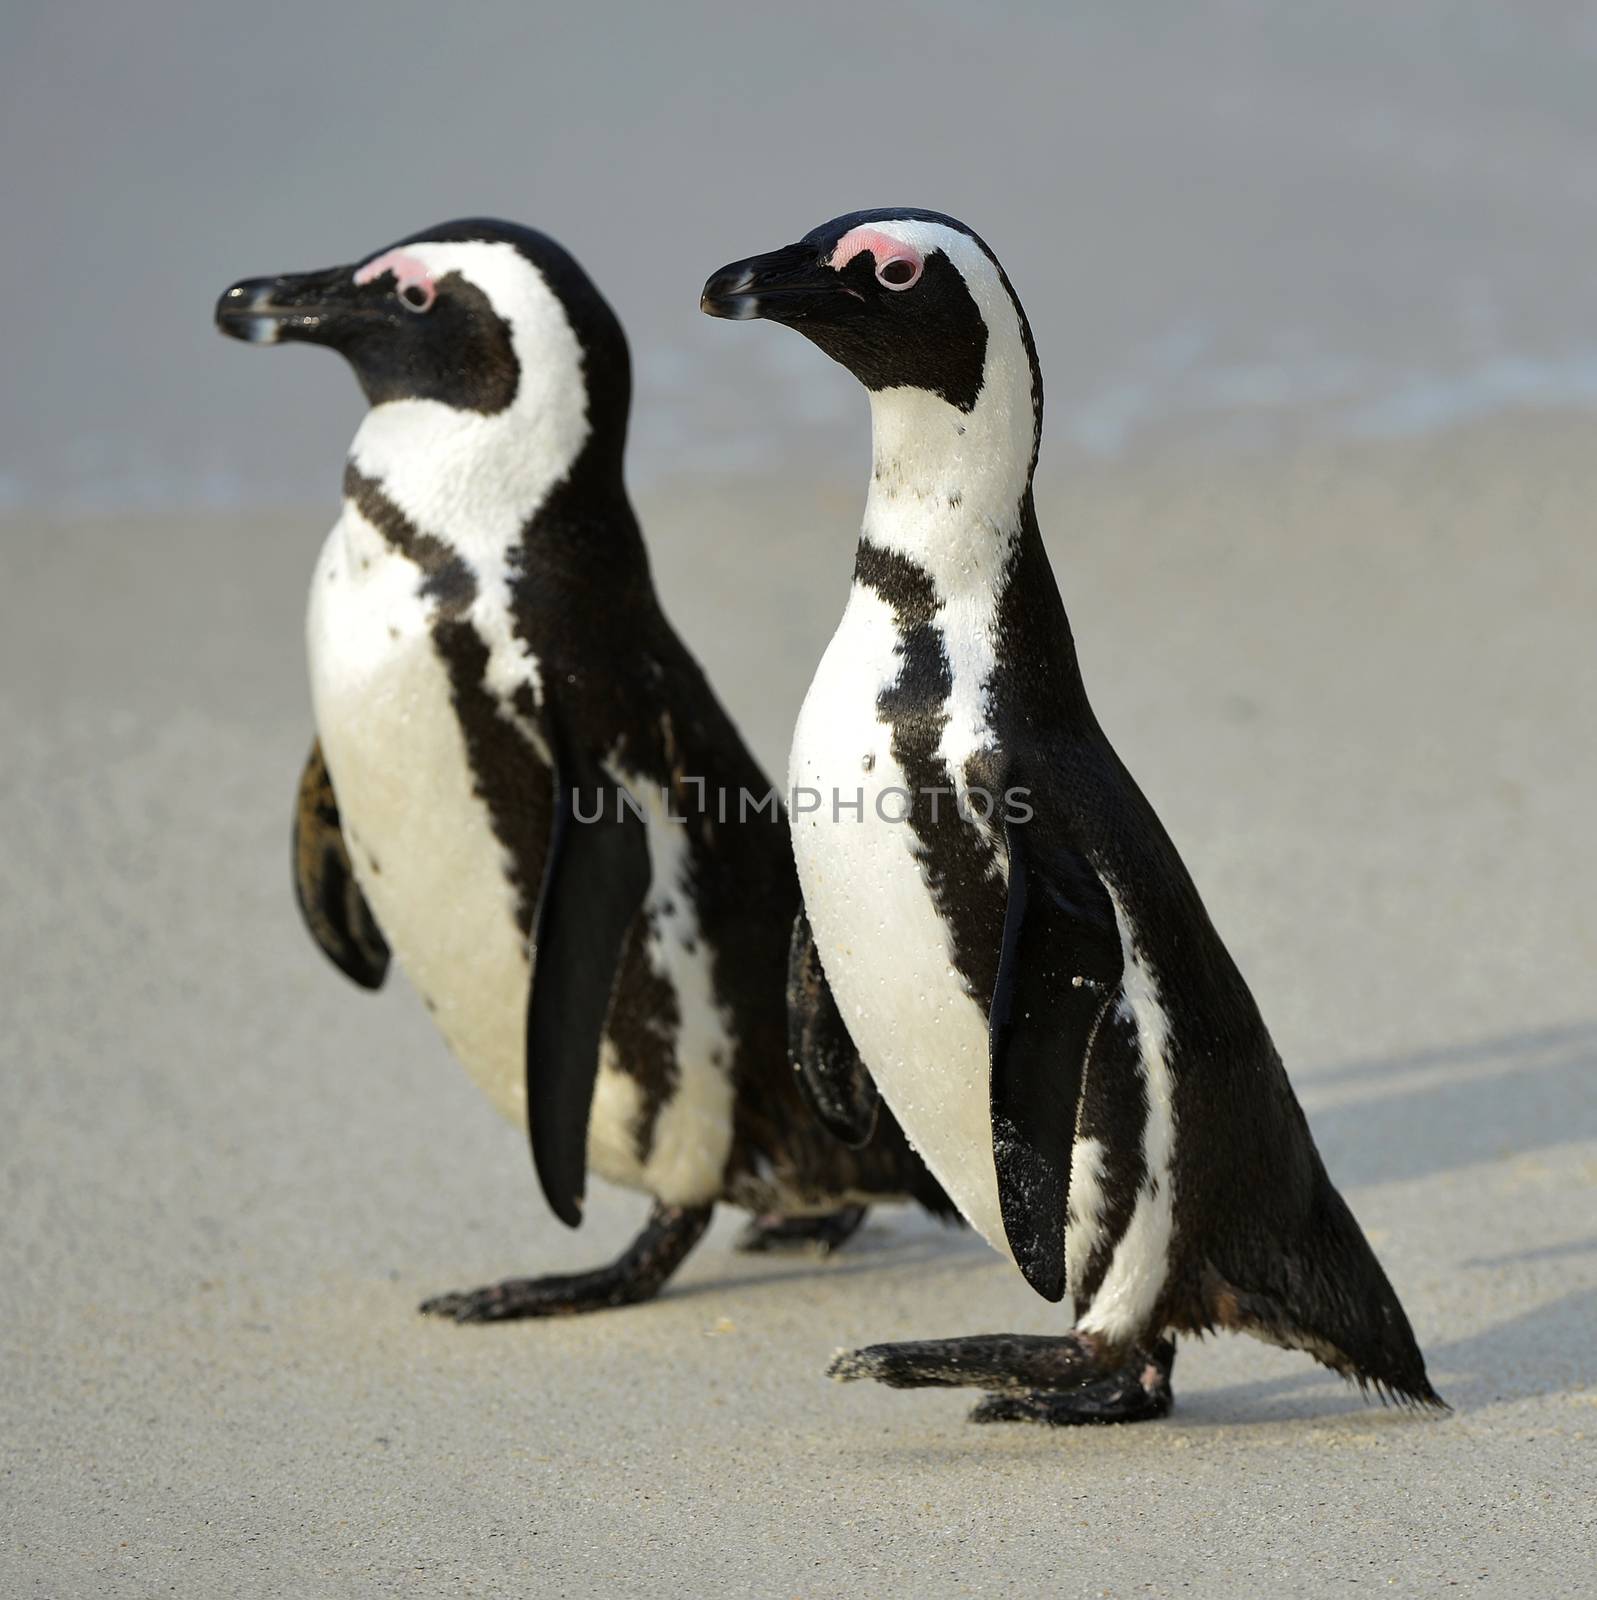  Walking African penguins by SURZ